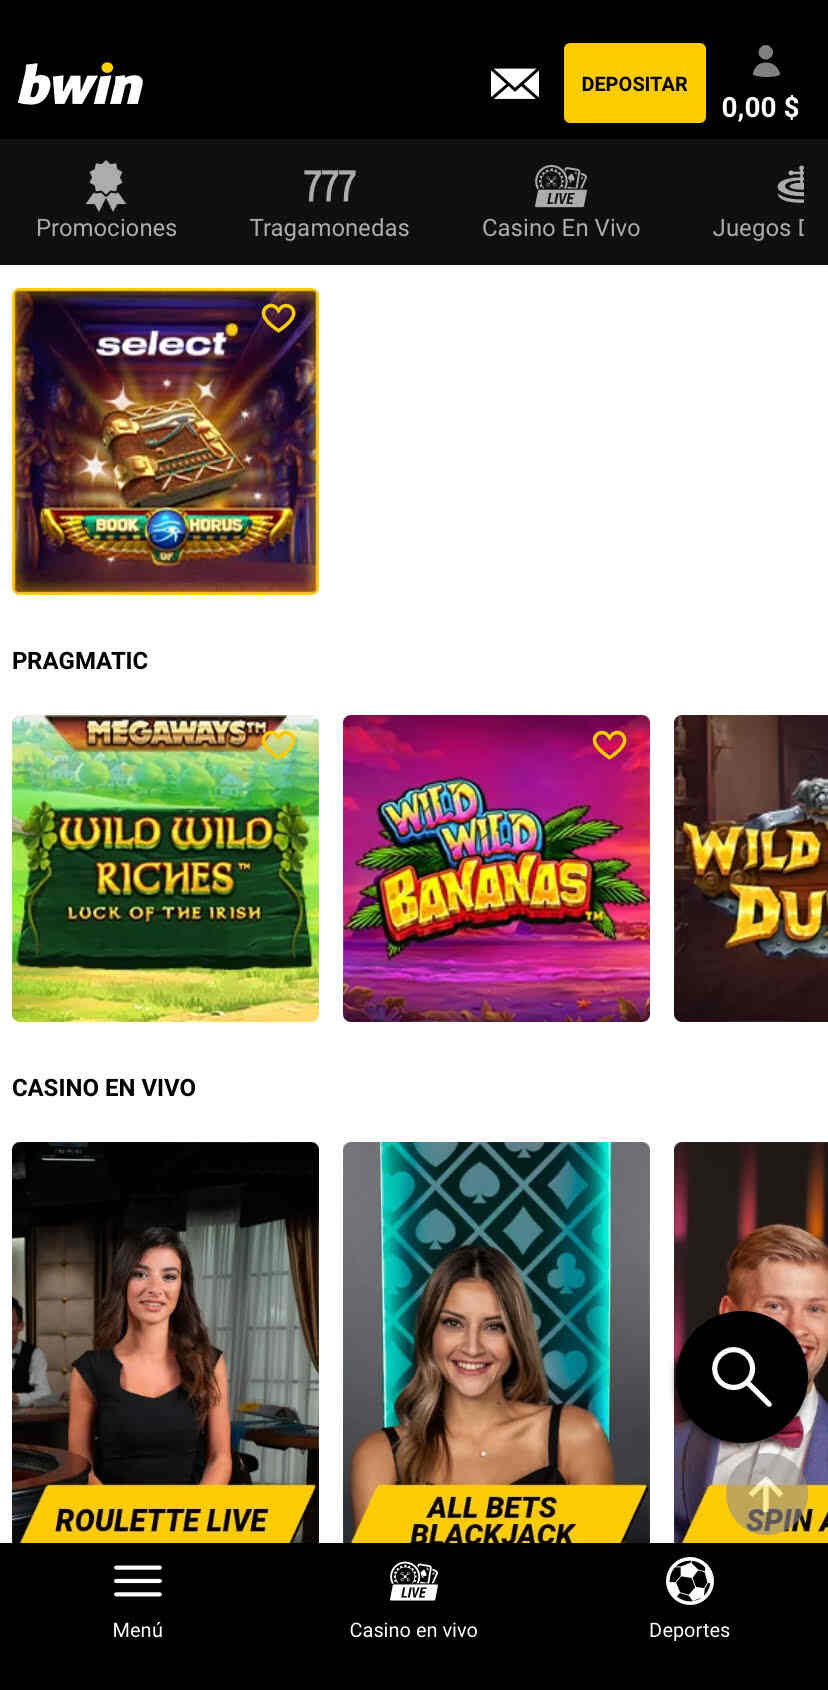 Bwin app interfaz casino